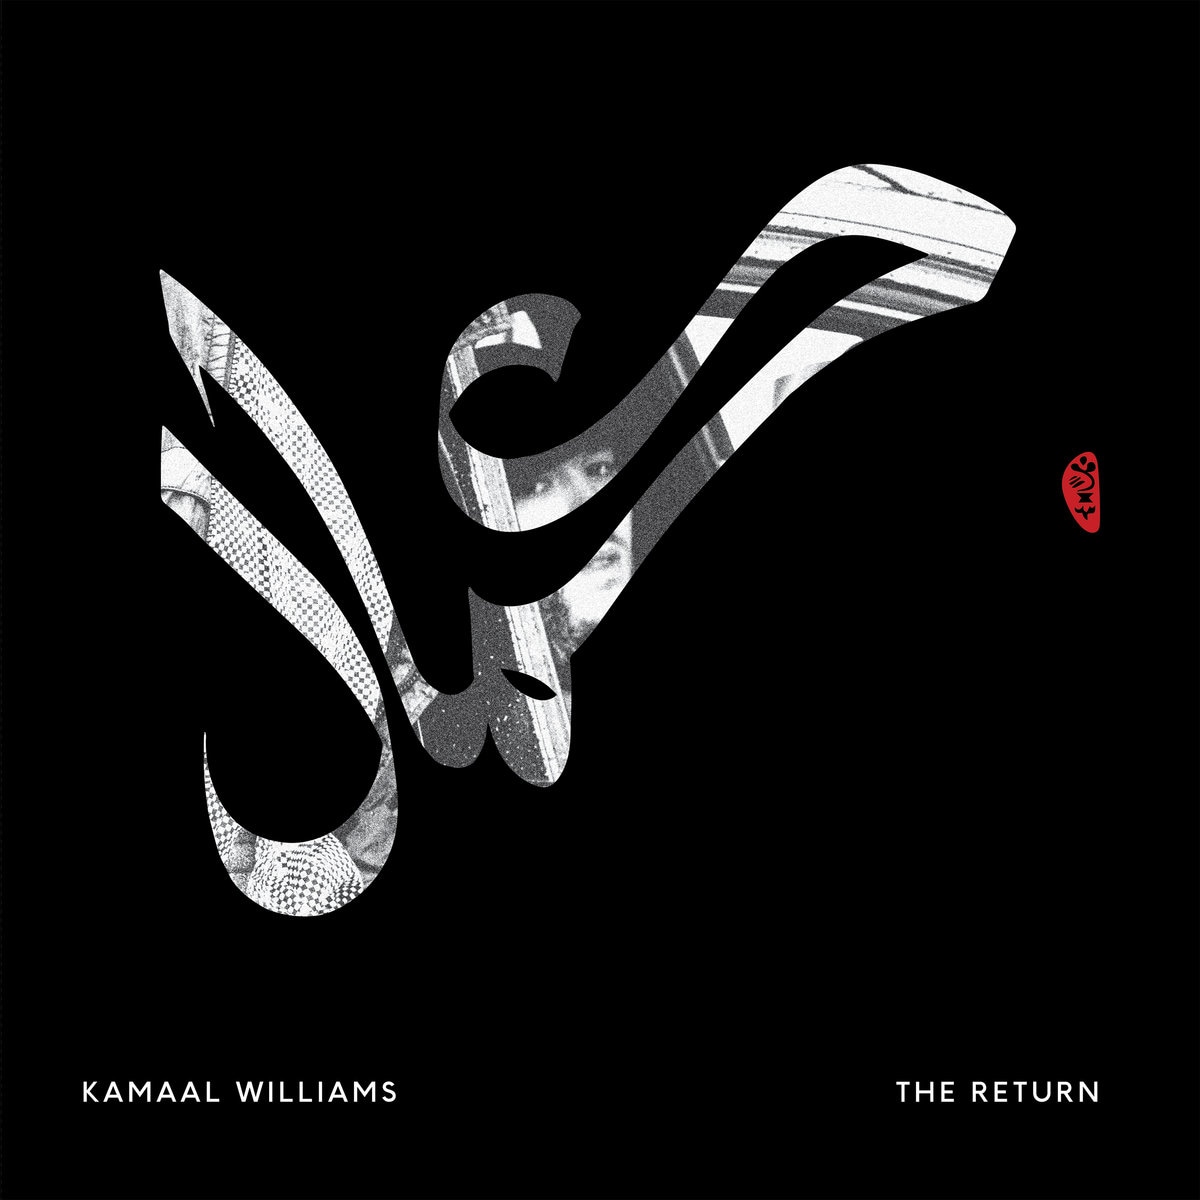  2. Kamaal Williams - The Return